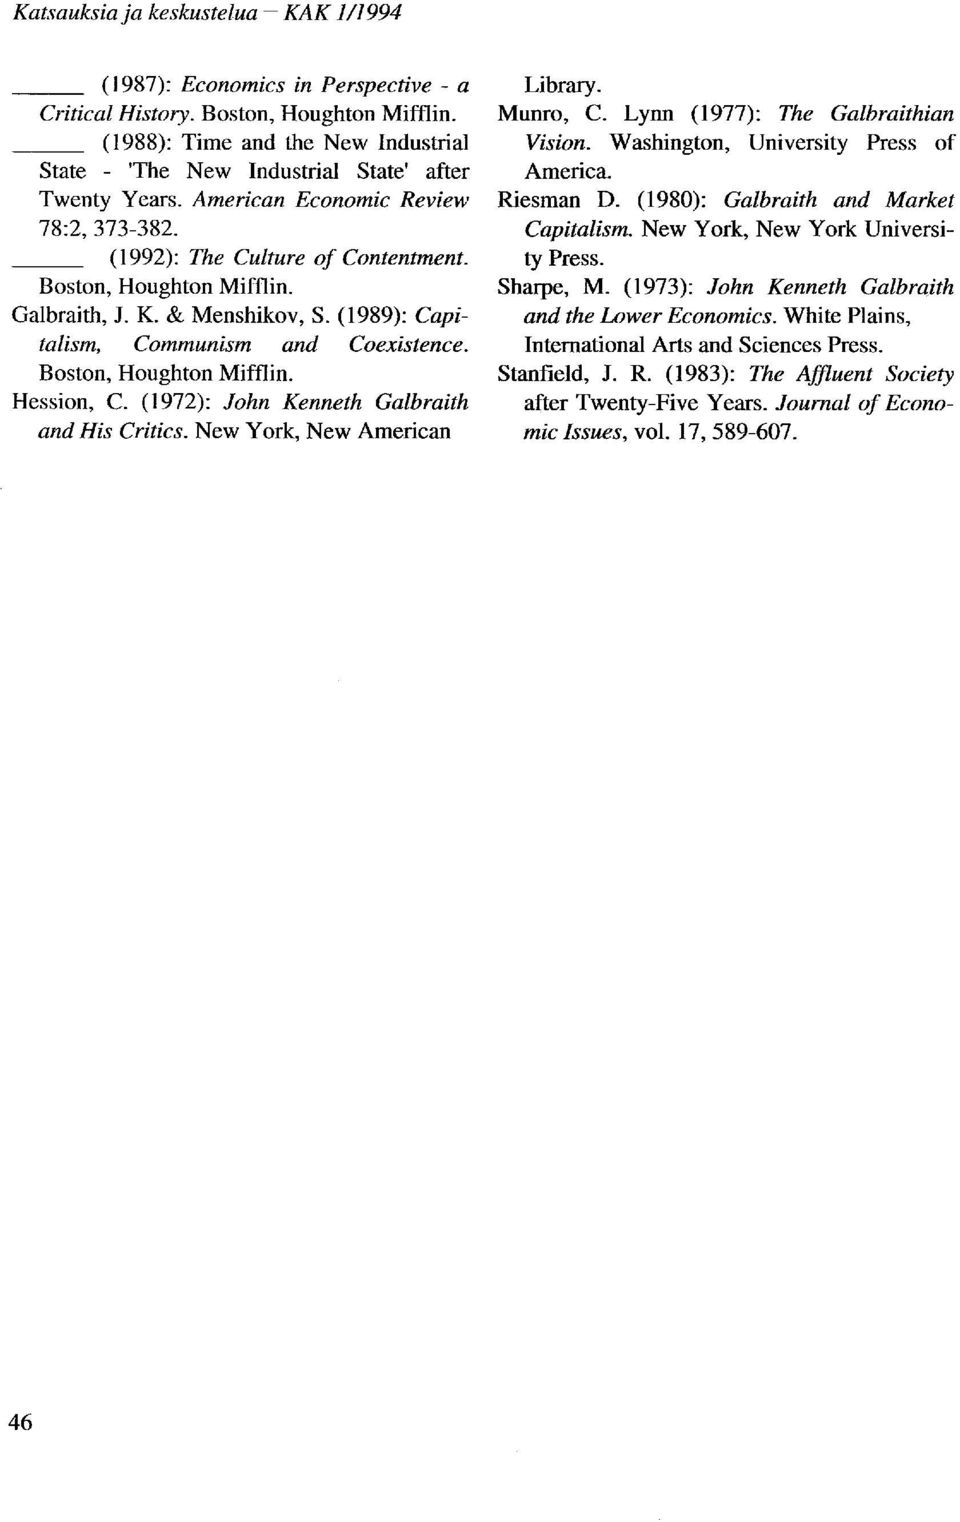 (1972): John Kenneth Galbraith and His Critics. New York, New American Library. Munro, C. Lynn (1977): The Galbraithian Vision. Washington, University Press of America. Riesman D.